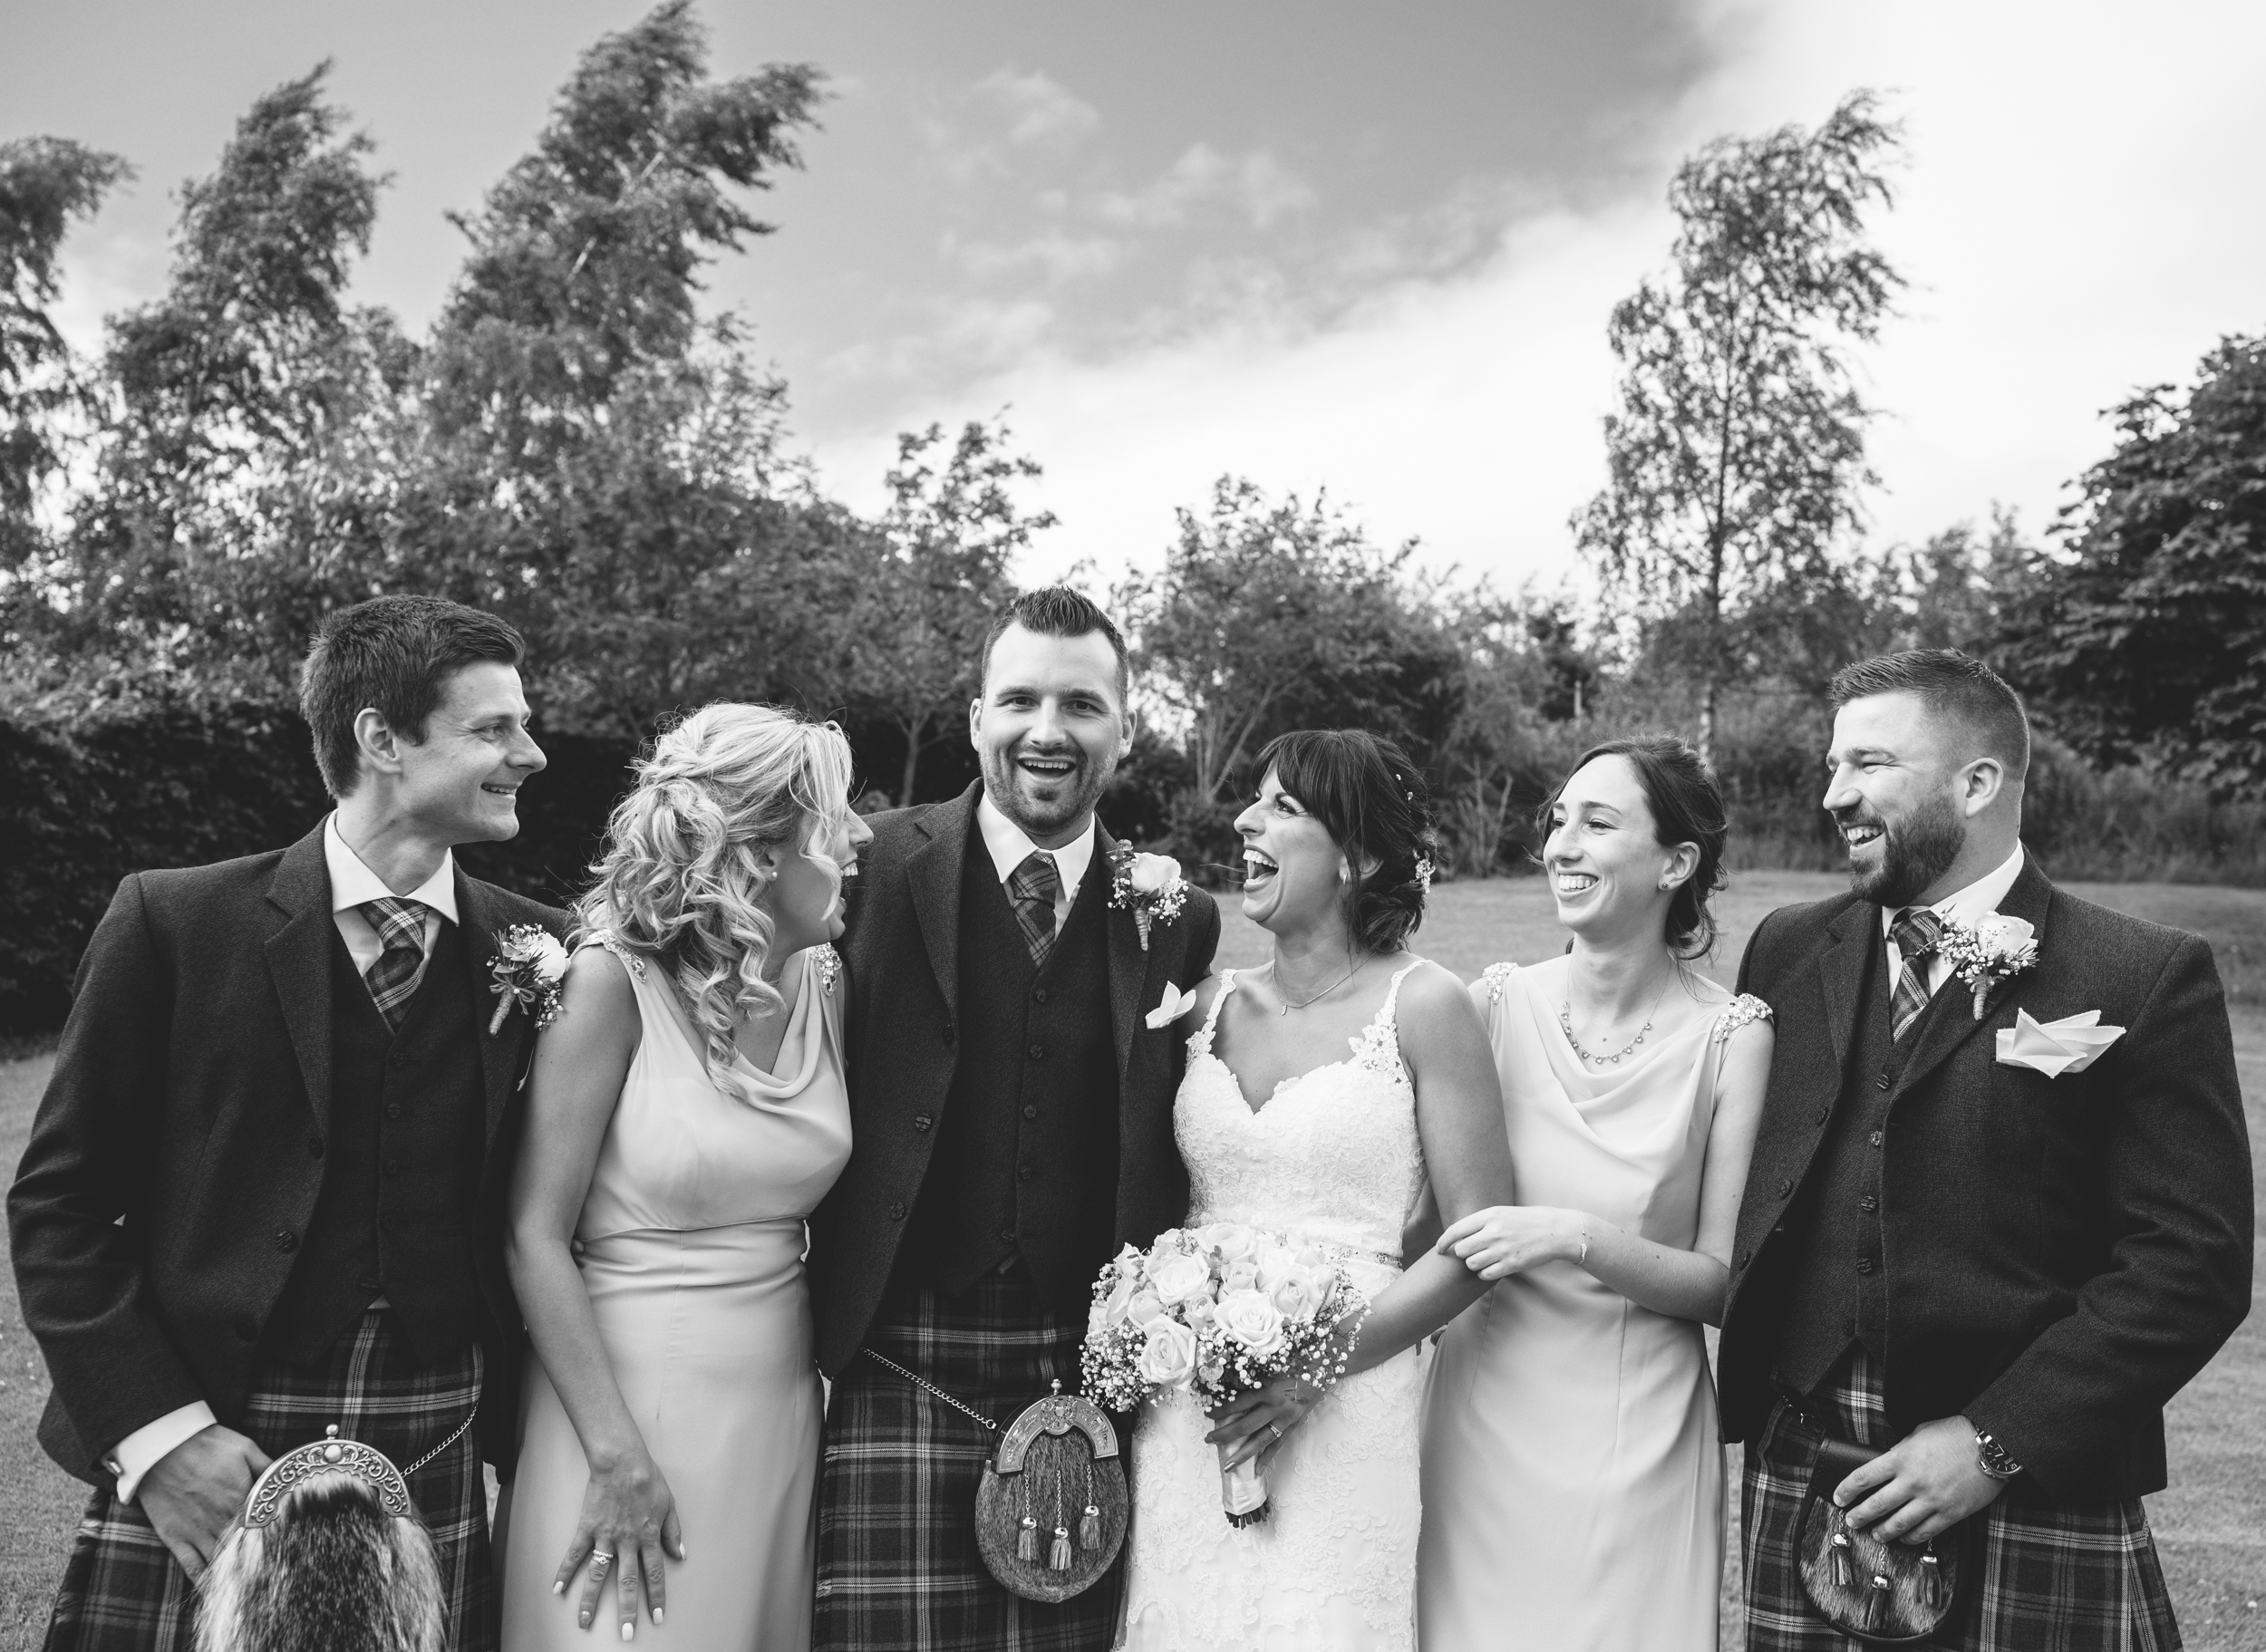  wedding photographers in aberdeen, wedding photography aberdeen, Scottish wedding photographer, we fell in love blog,&nbsp; 